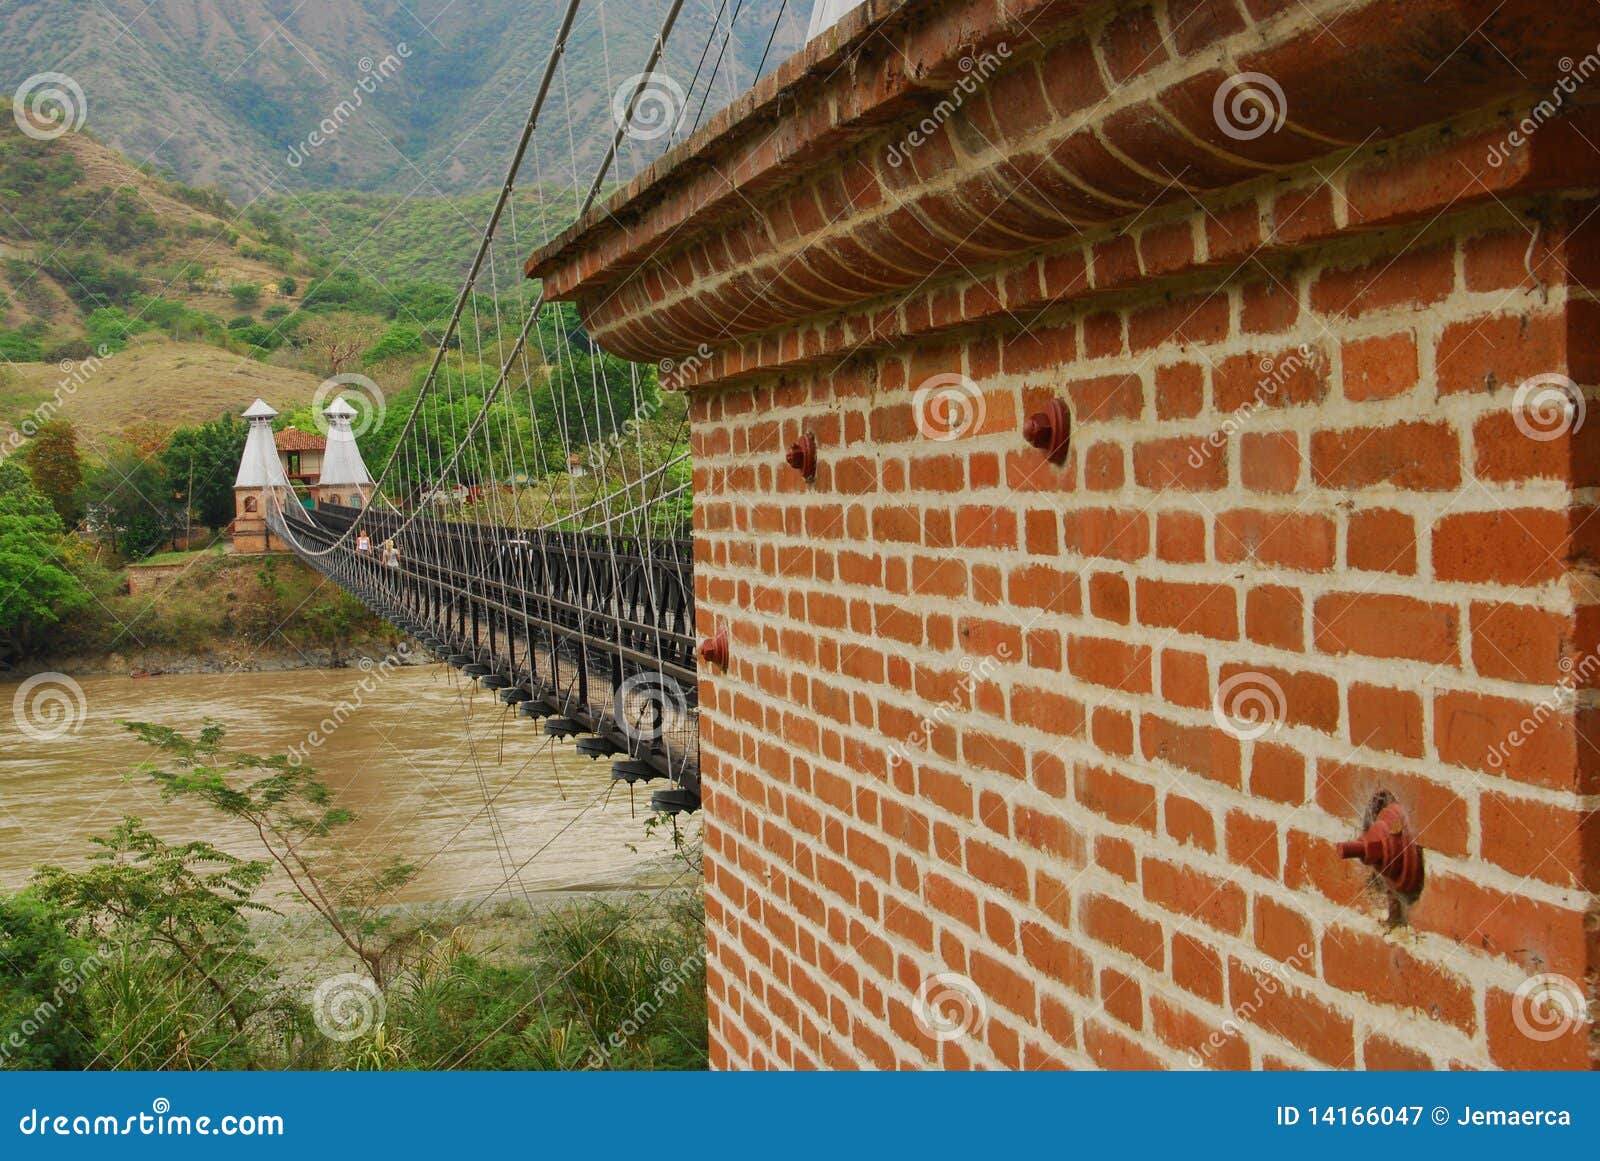 detail of puente de occidente, colombia